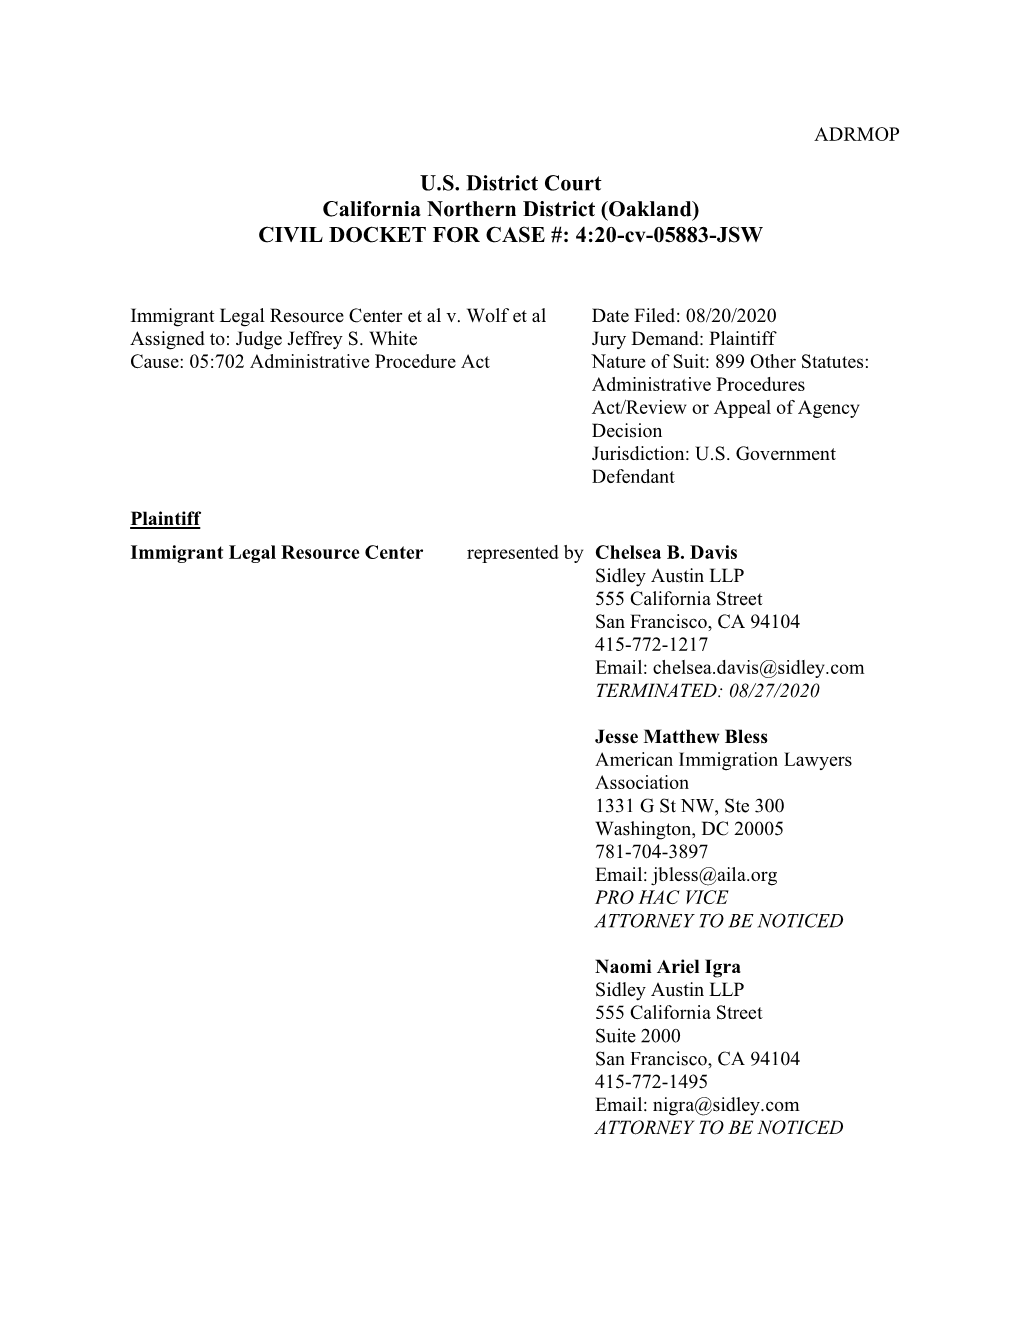 U.S. District Court California Northern District (Oakland) CIVIL DOCKET for CASE #: 4:20-Cv-05883-JSW